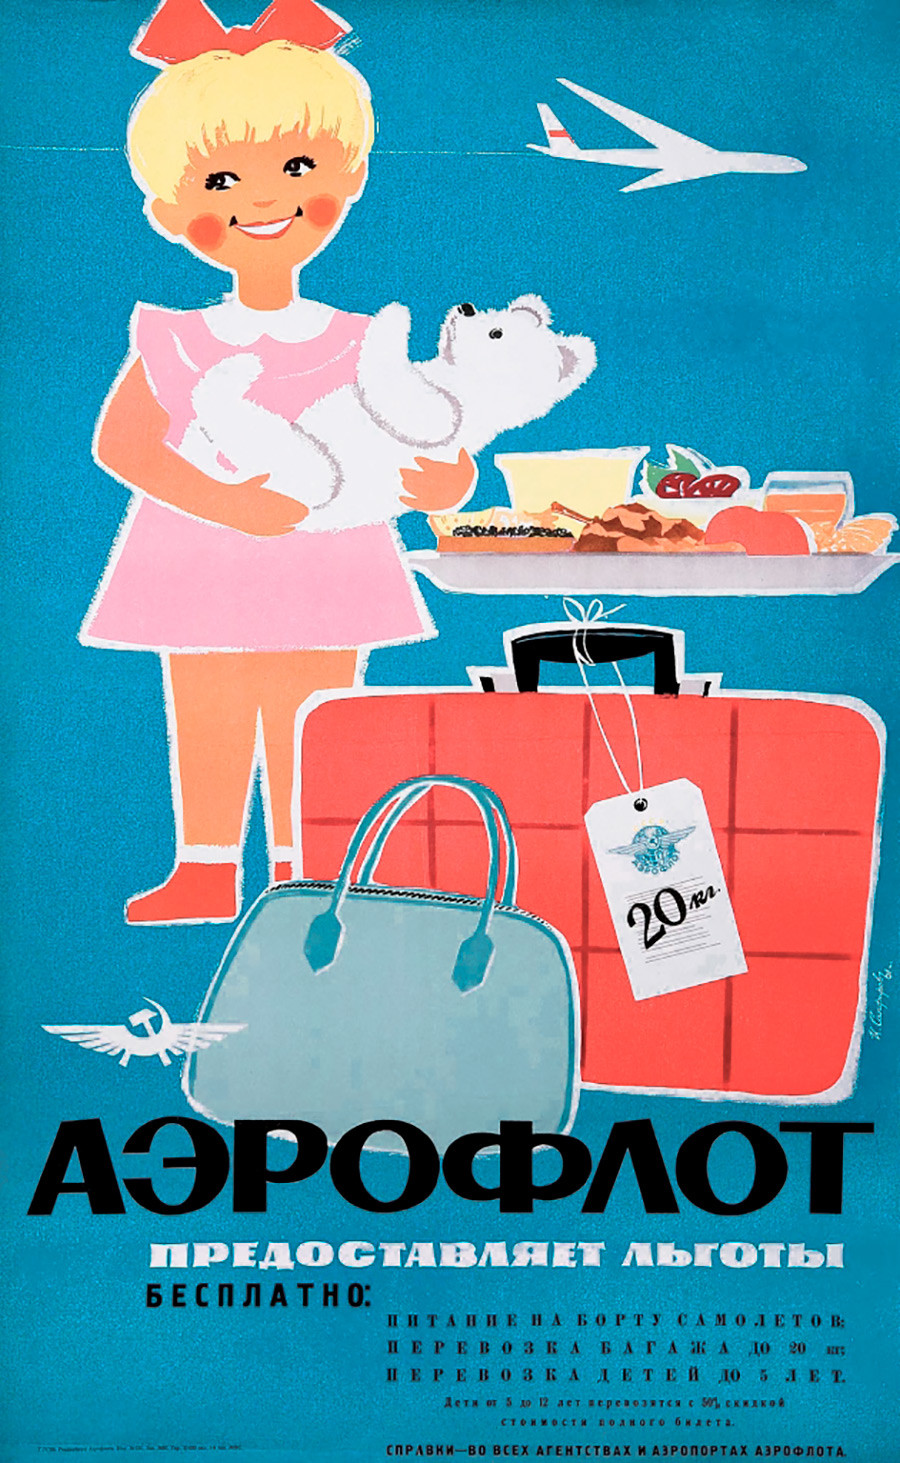 'Aeroflot provides benefits'
